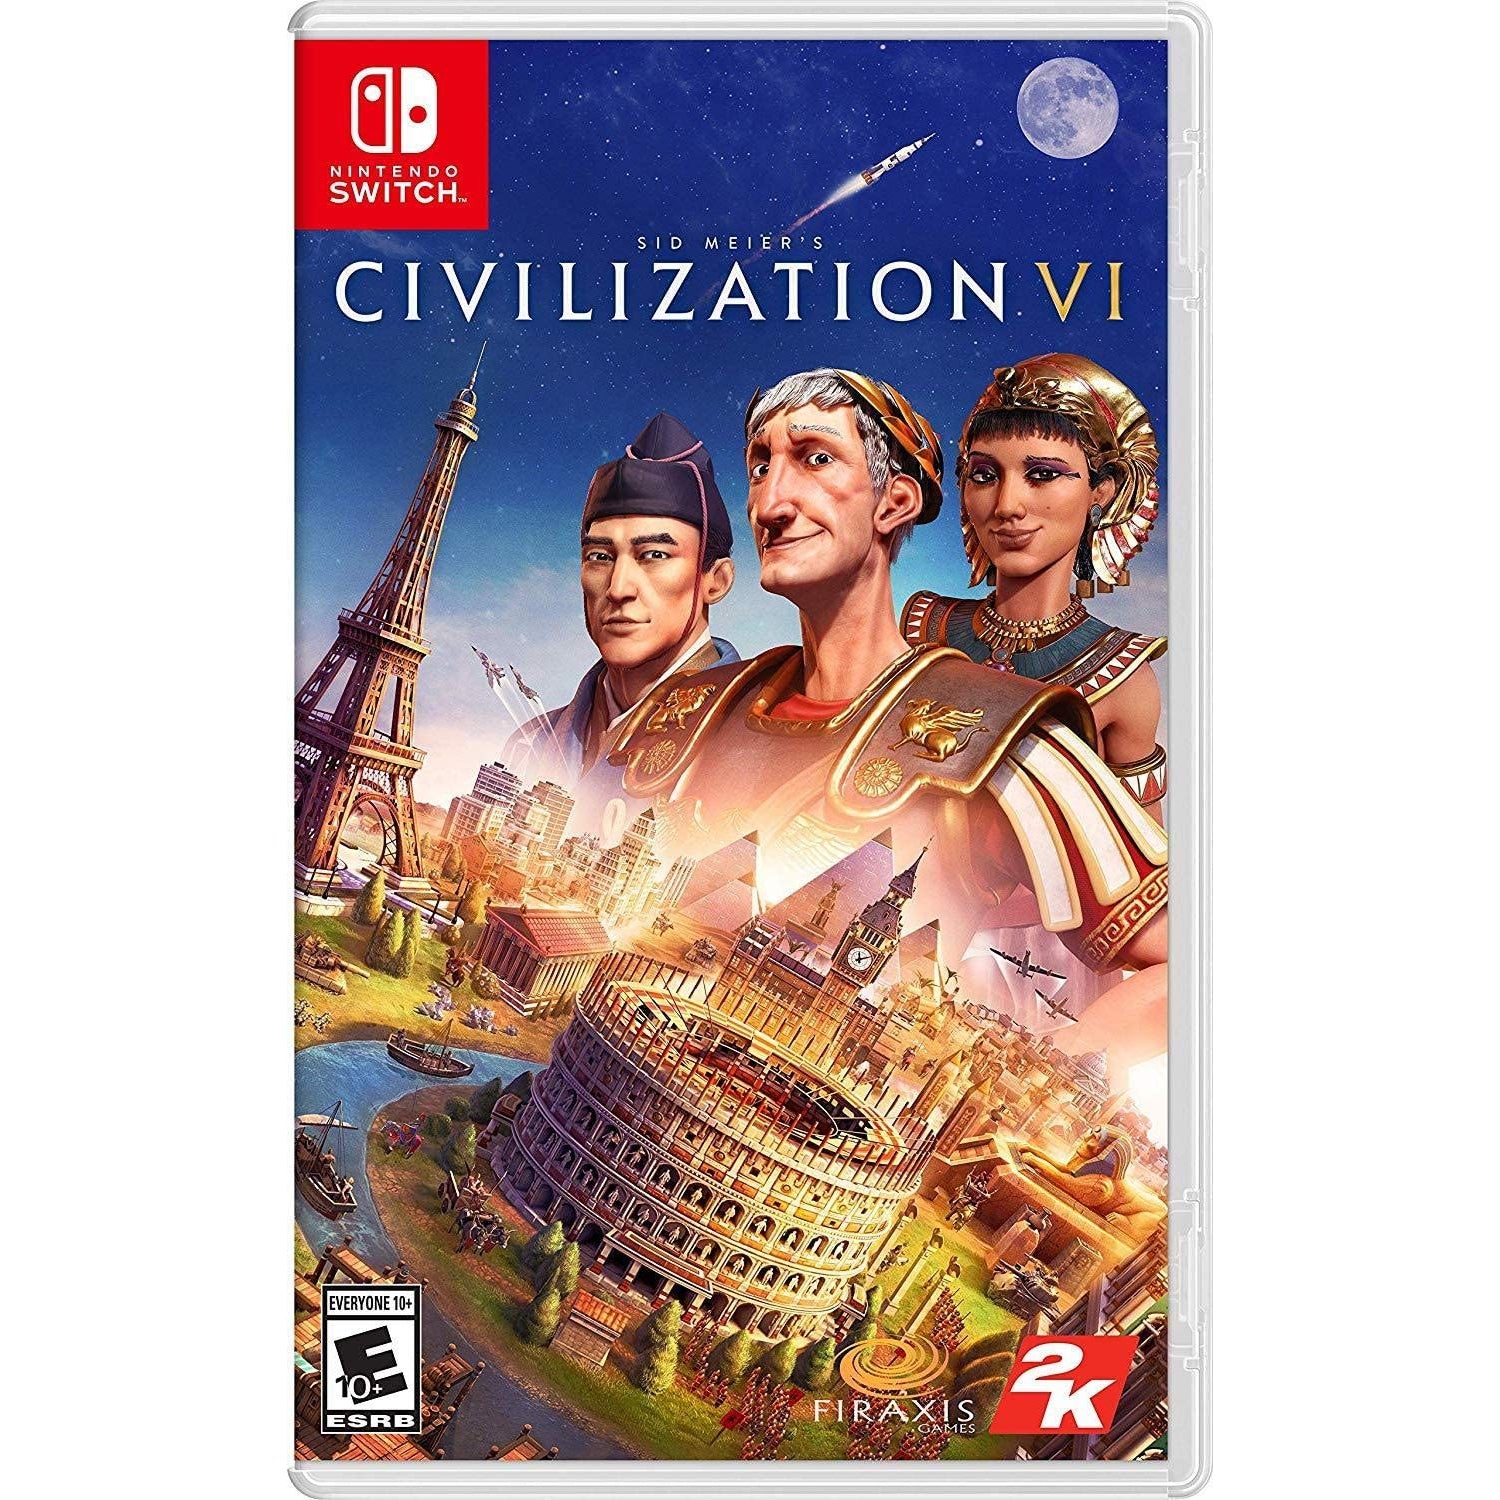 Sid Meier's Civilization VI for Nintendo Switch